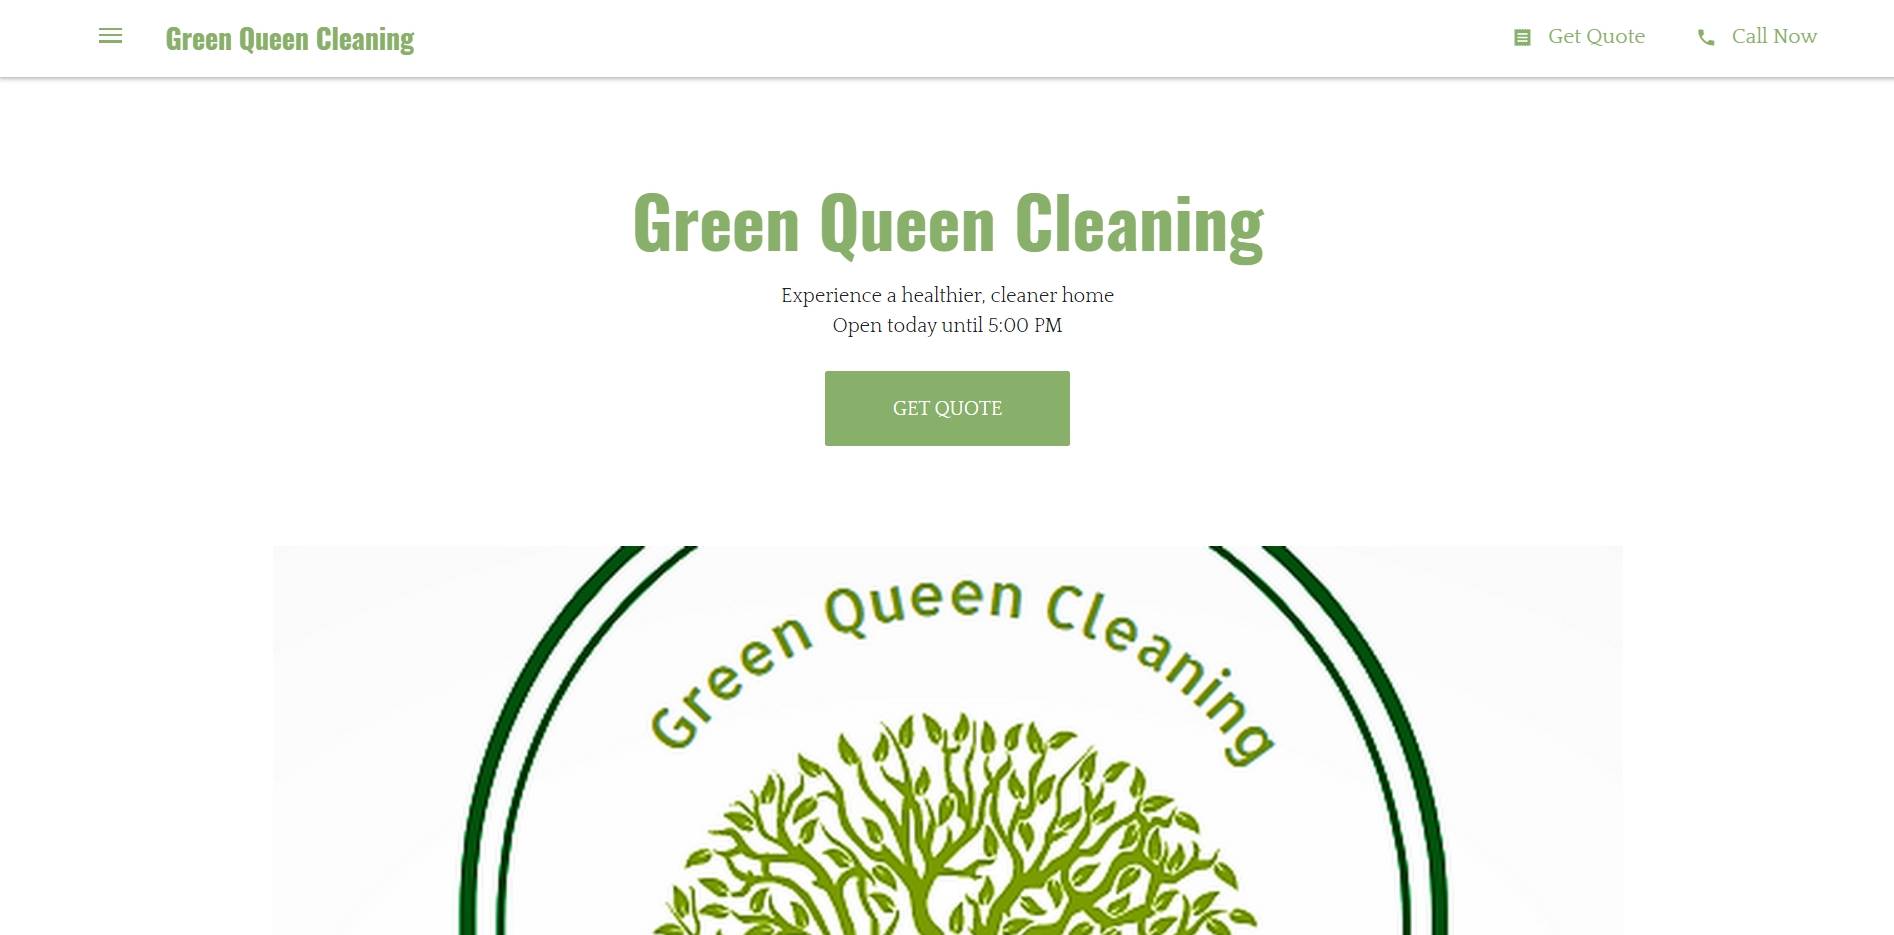 Green Queen Cleaning